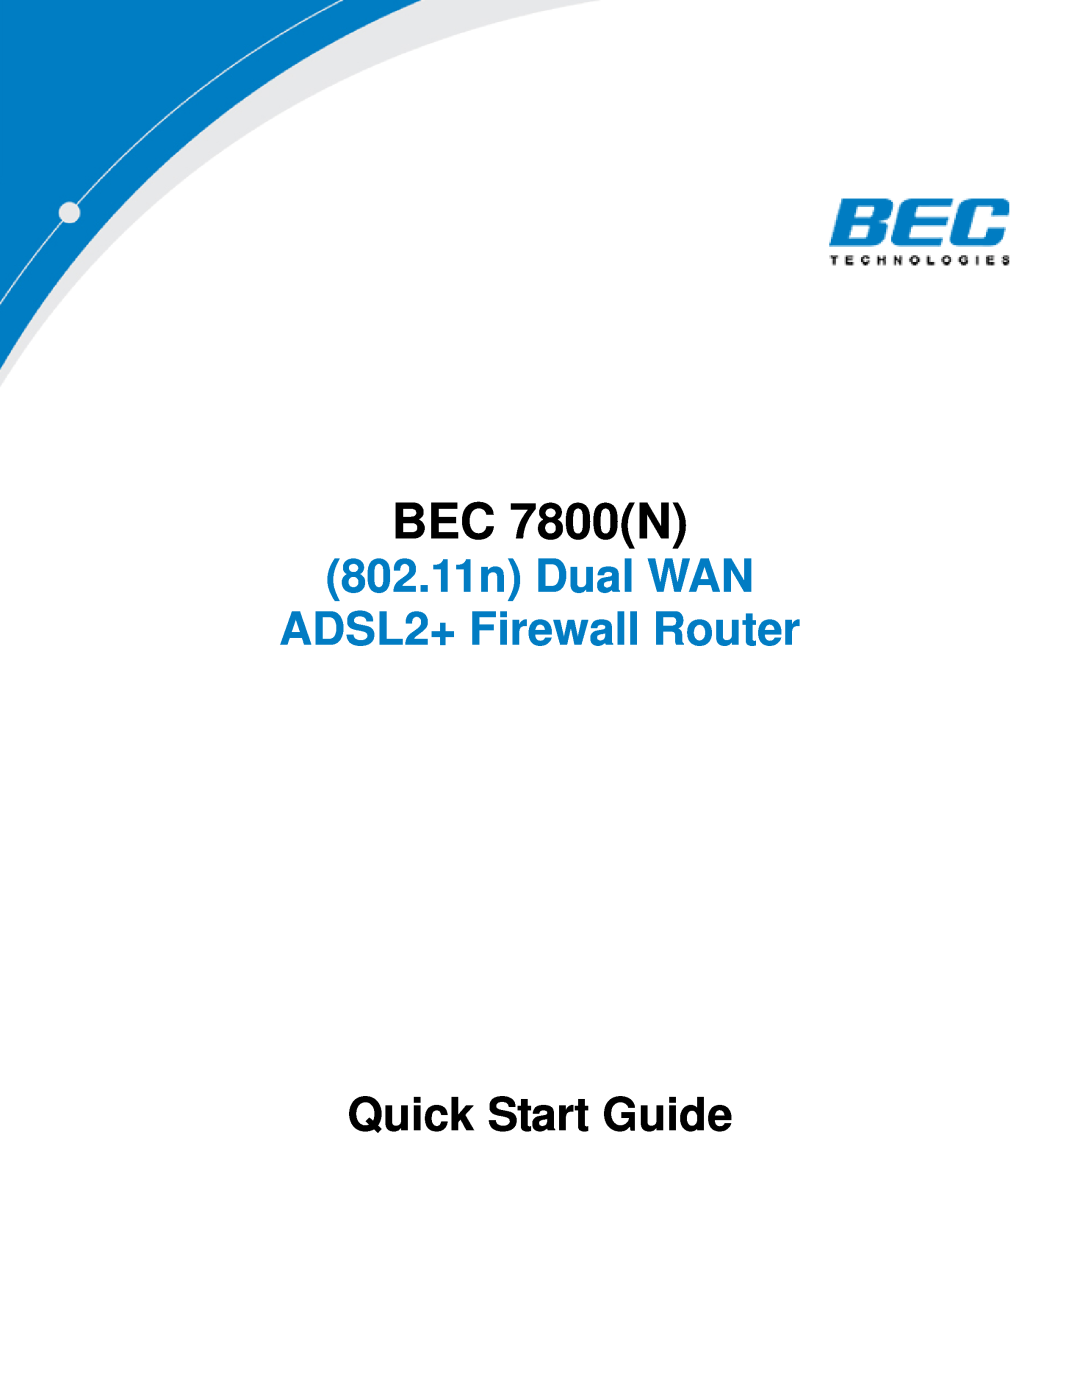 Billion Electric Company BEC 7800(N) quick start BEC 7800N, 802.11n Dual WAN ADSL2+ Firewall Router, Quick Start Guide 